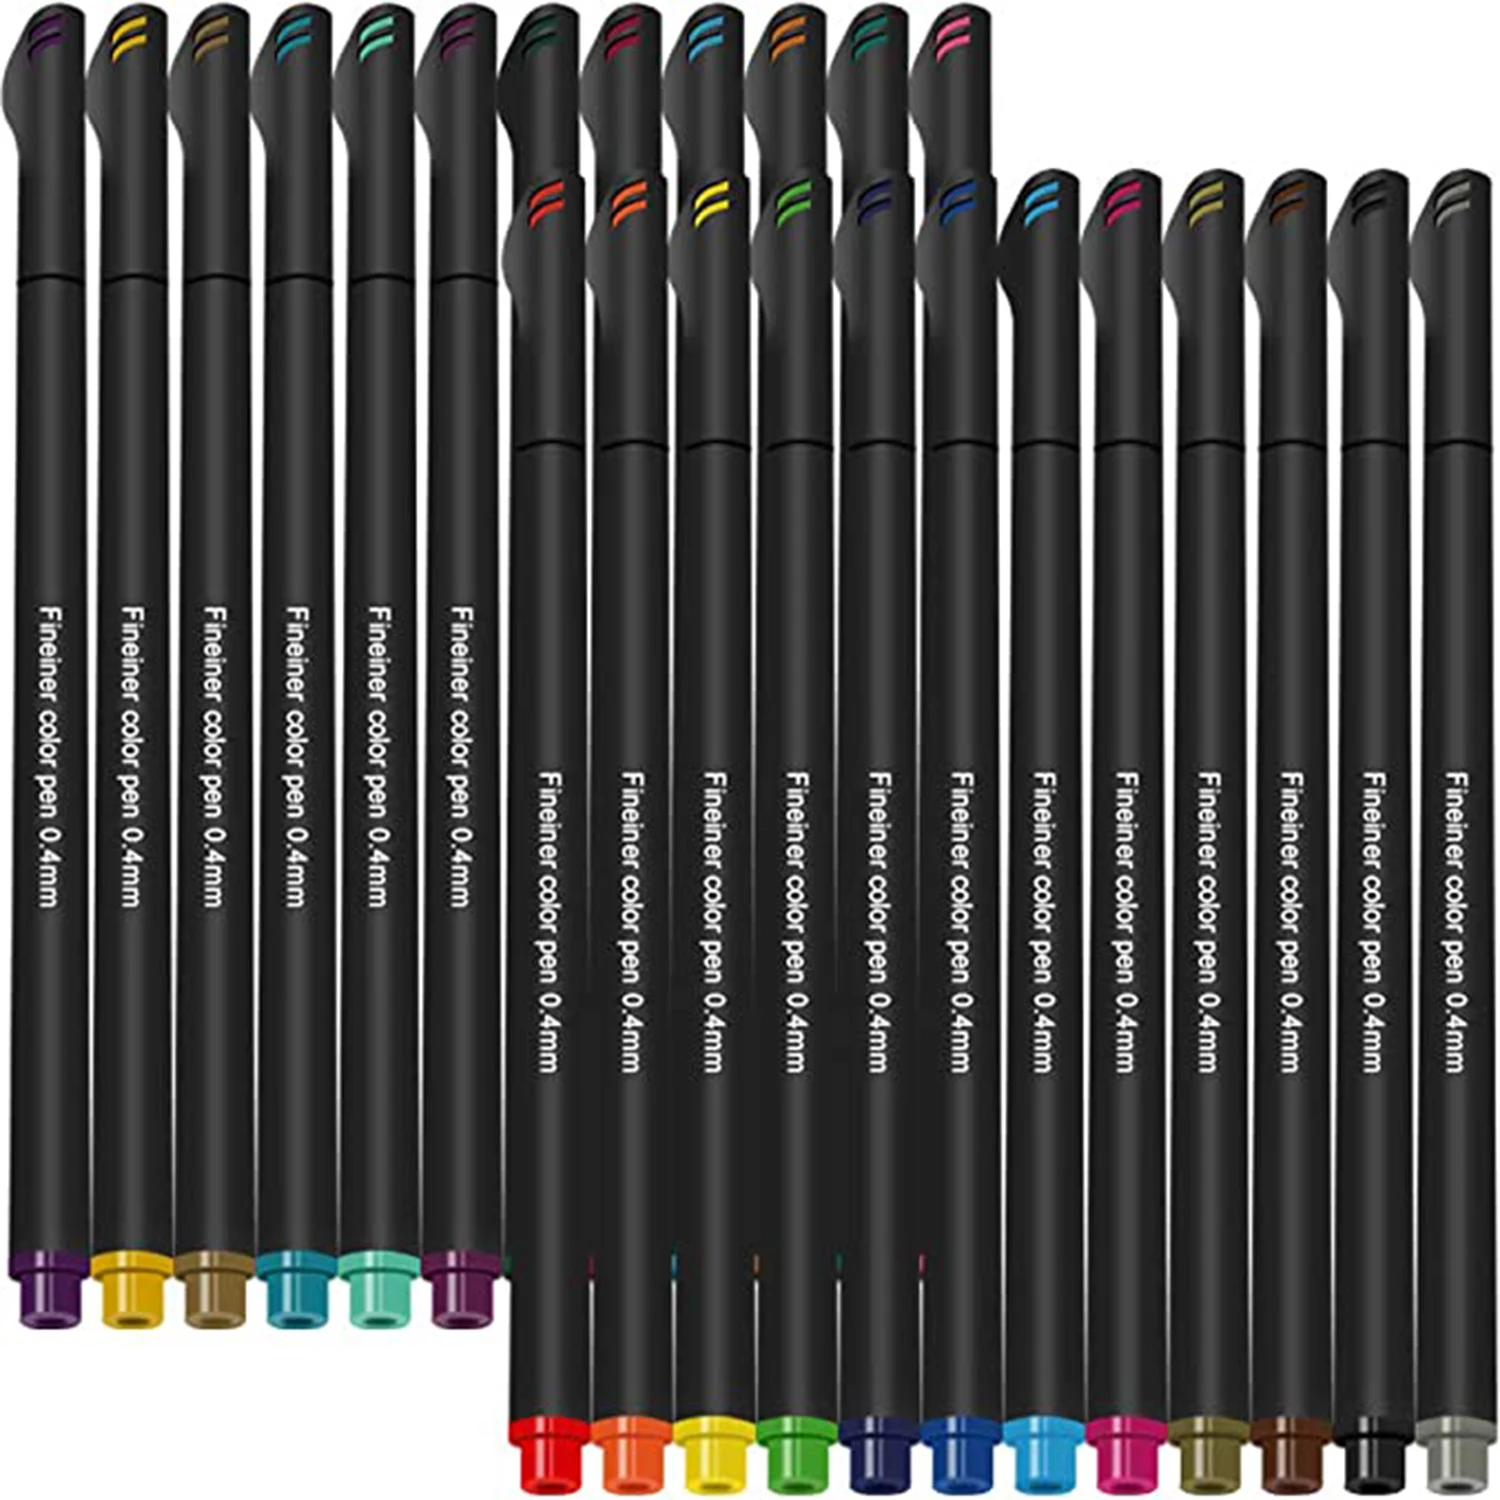 

24 Color Set 0.4mm Micro Tip Fineliner Pen Drawing Painting Sketch Markers Set Fine Line Art Marker Office School Stationery